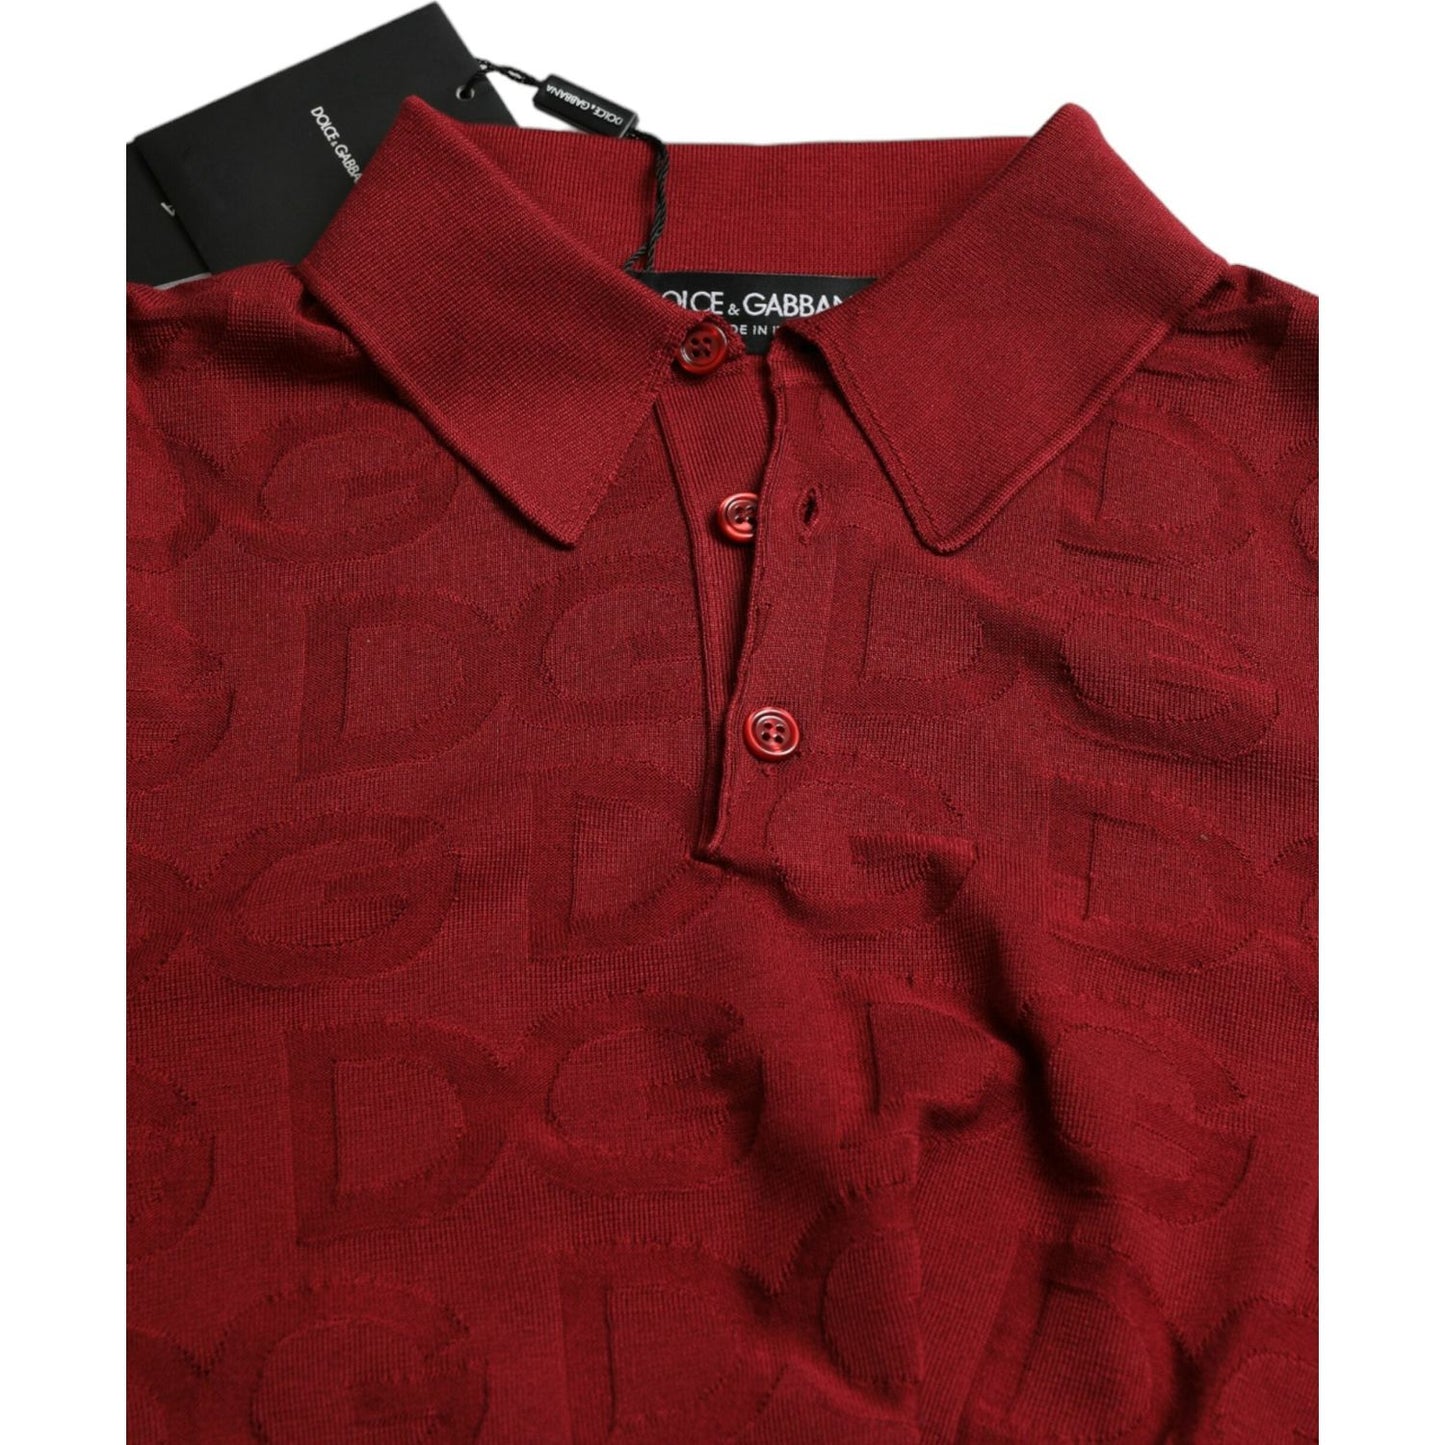 Dolce & Gabbana Elegant Silk Maroon Polo T-Shirt maroon-collared-short-sleeve-silk-t-shirt-1